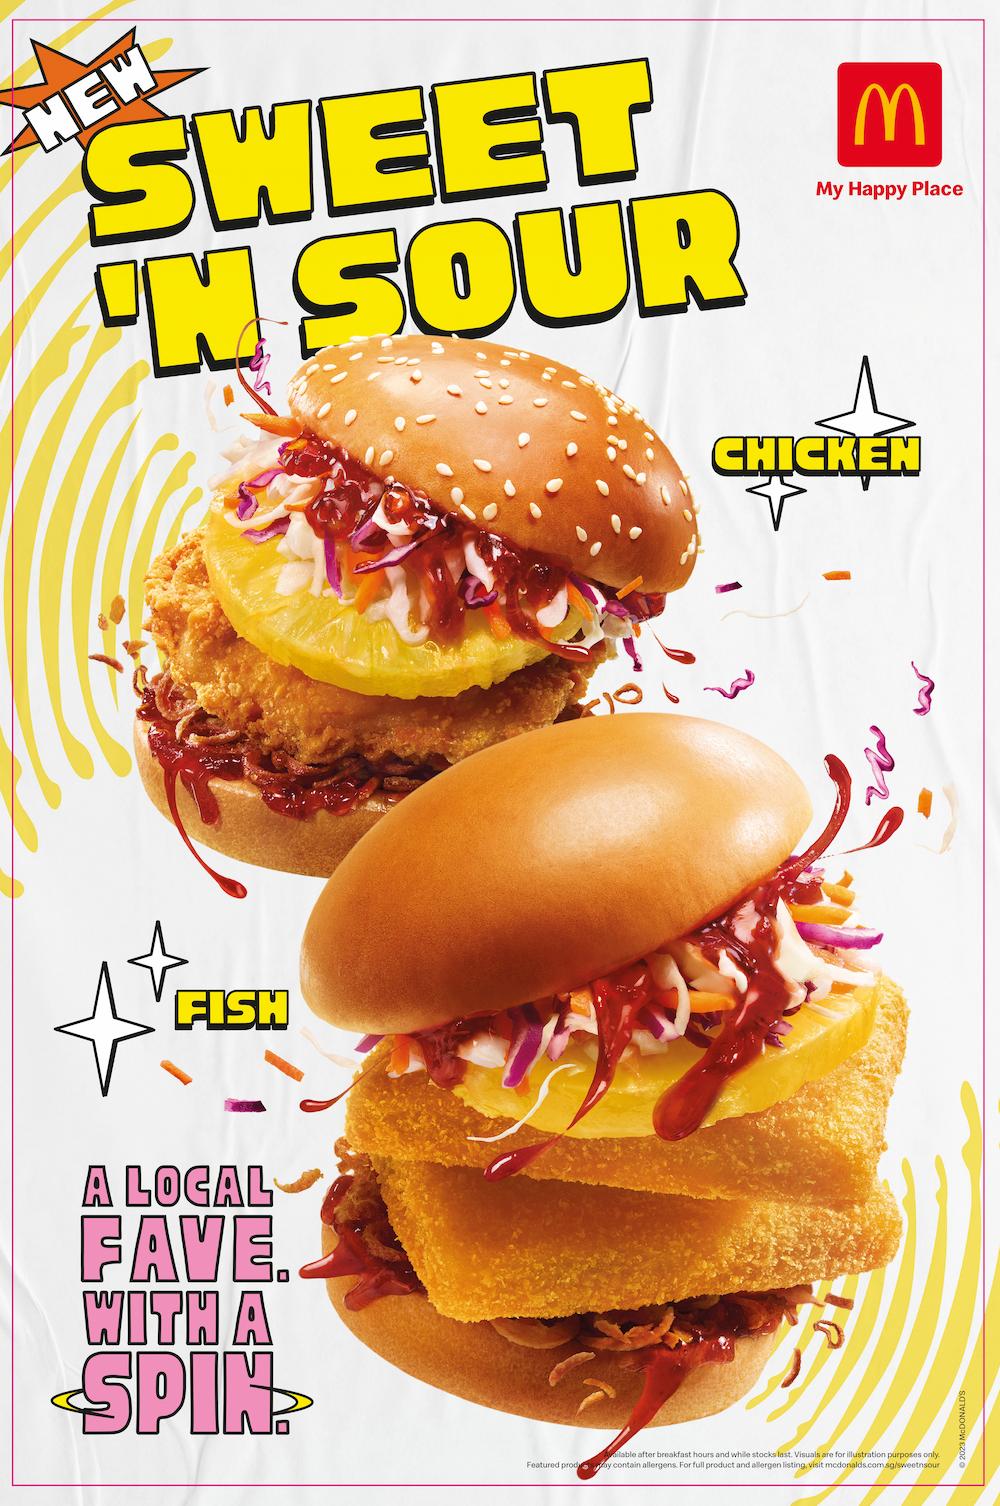 mcdonalds-sweet-sour-burger-promo